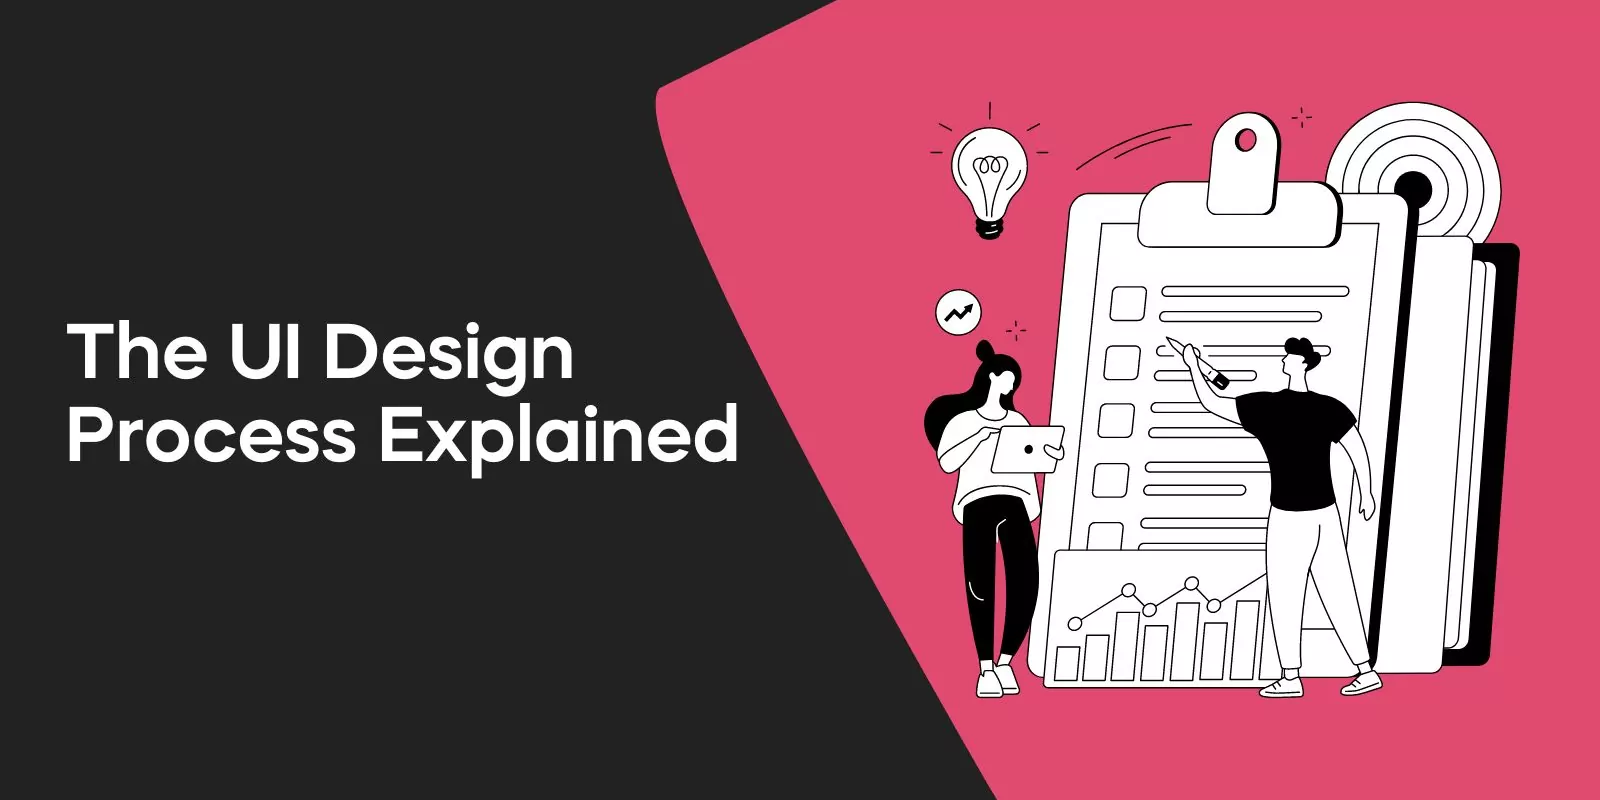 The UI Design Process Explained